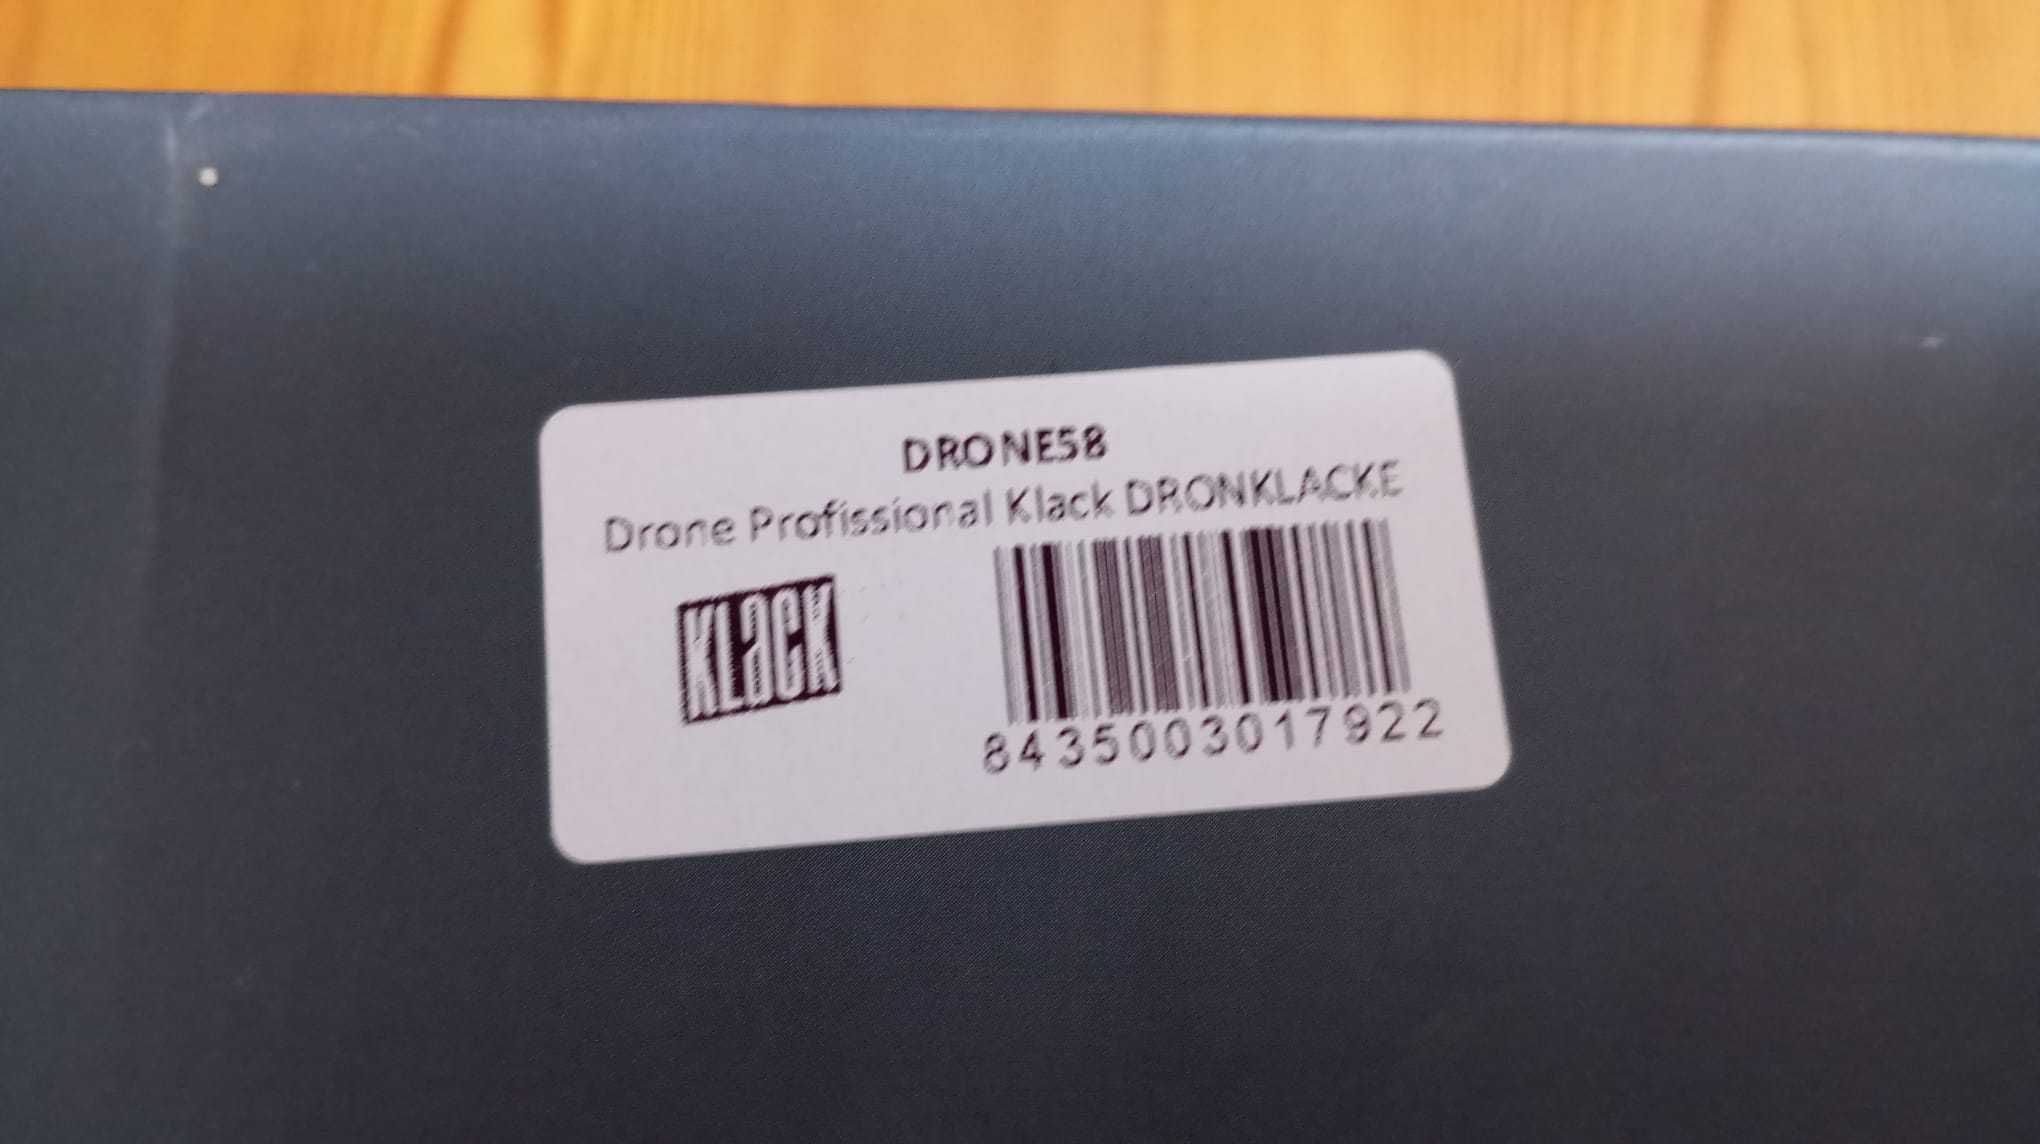 Drone Profissional klack Dronklacke como novo!